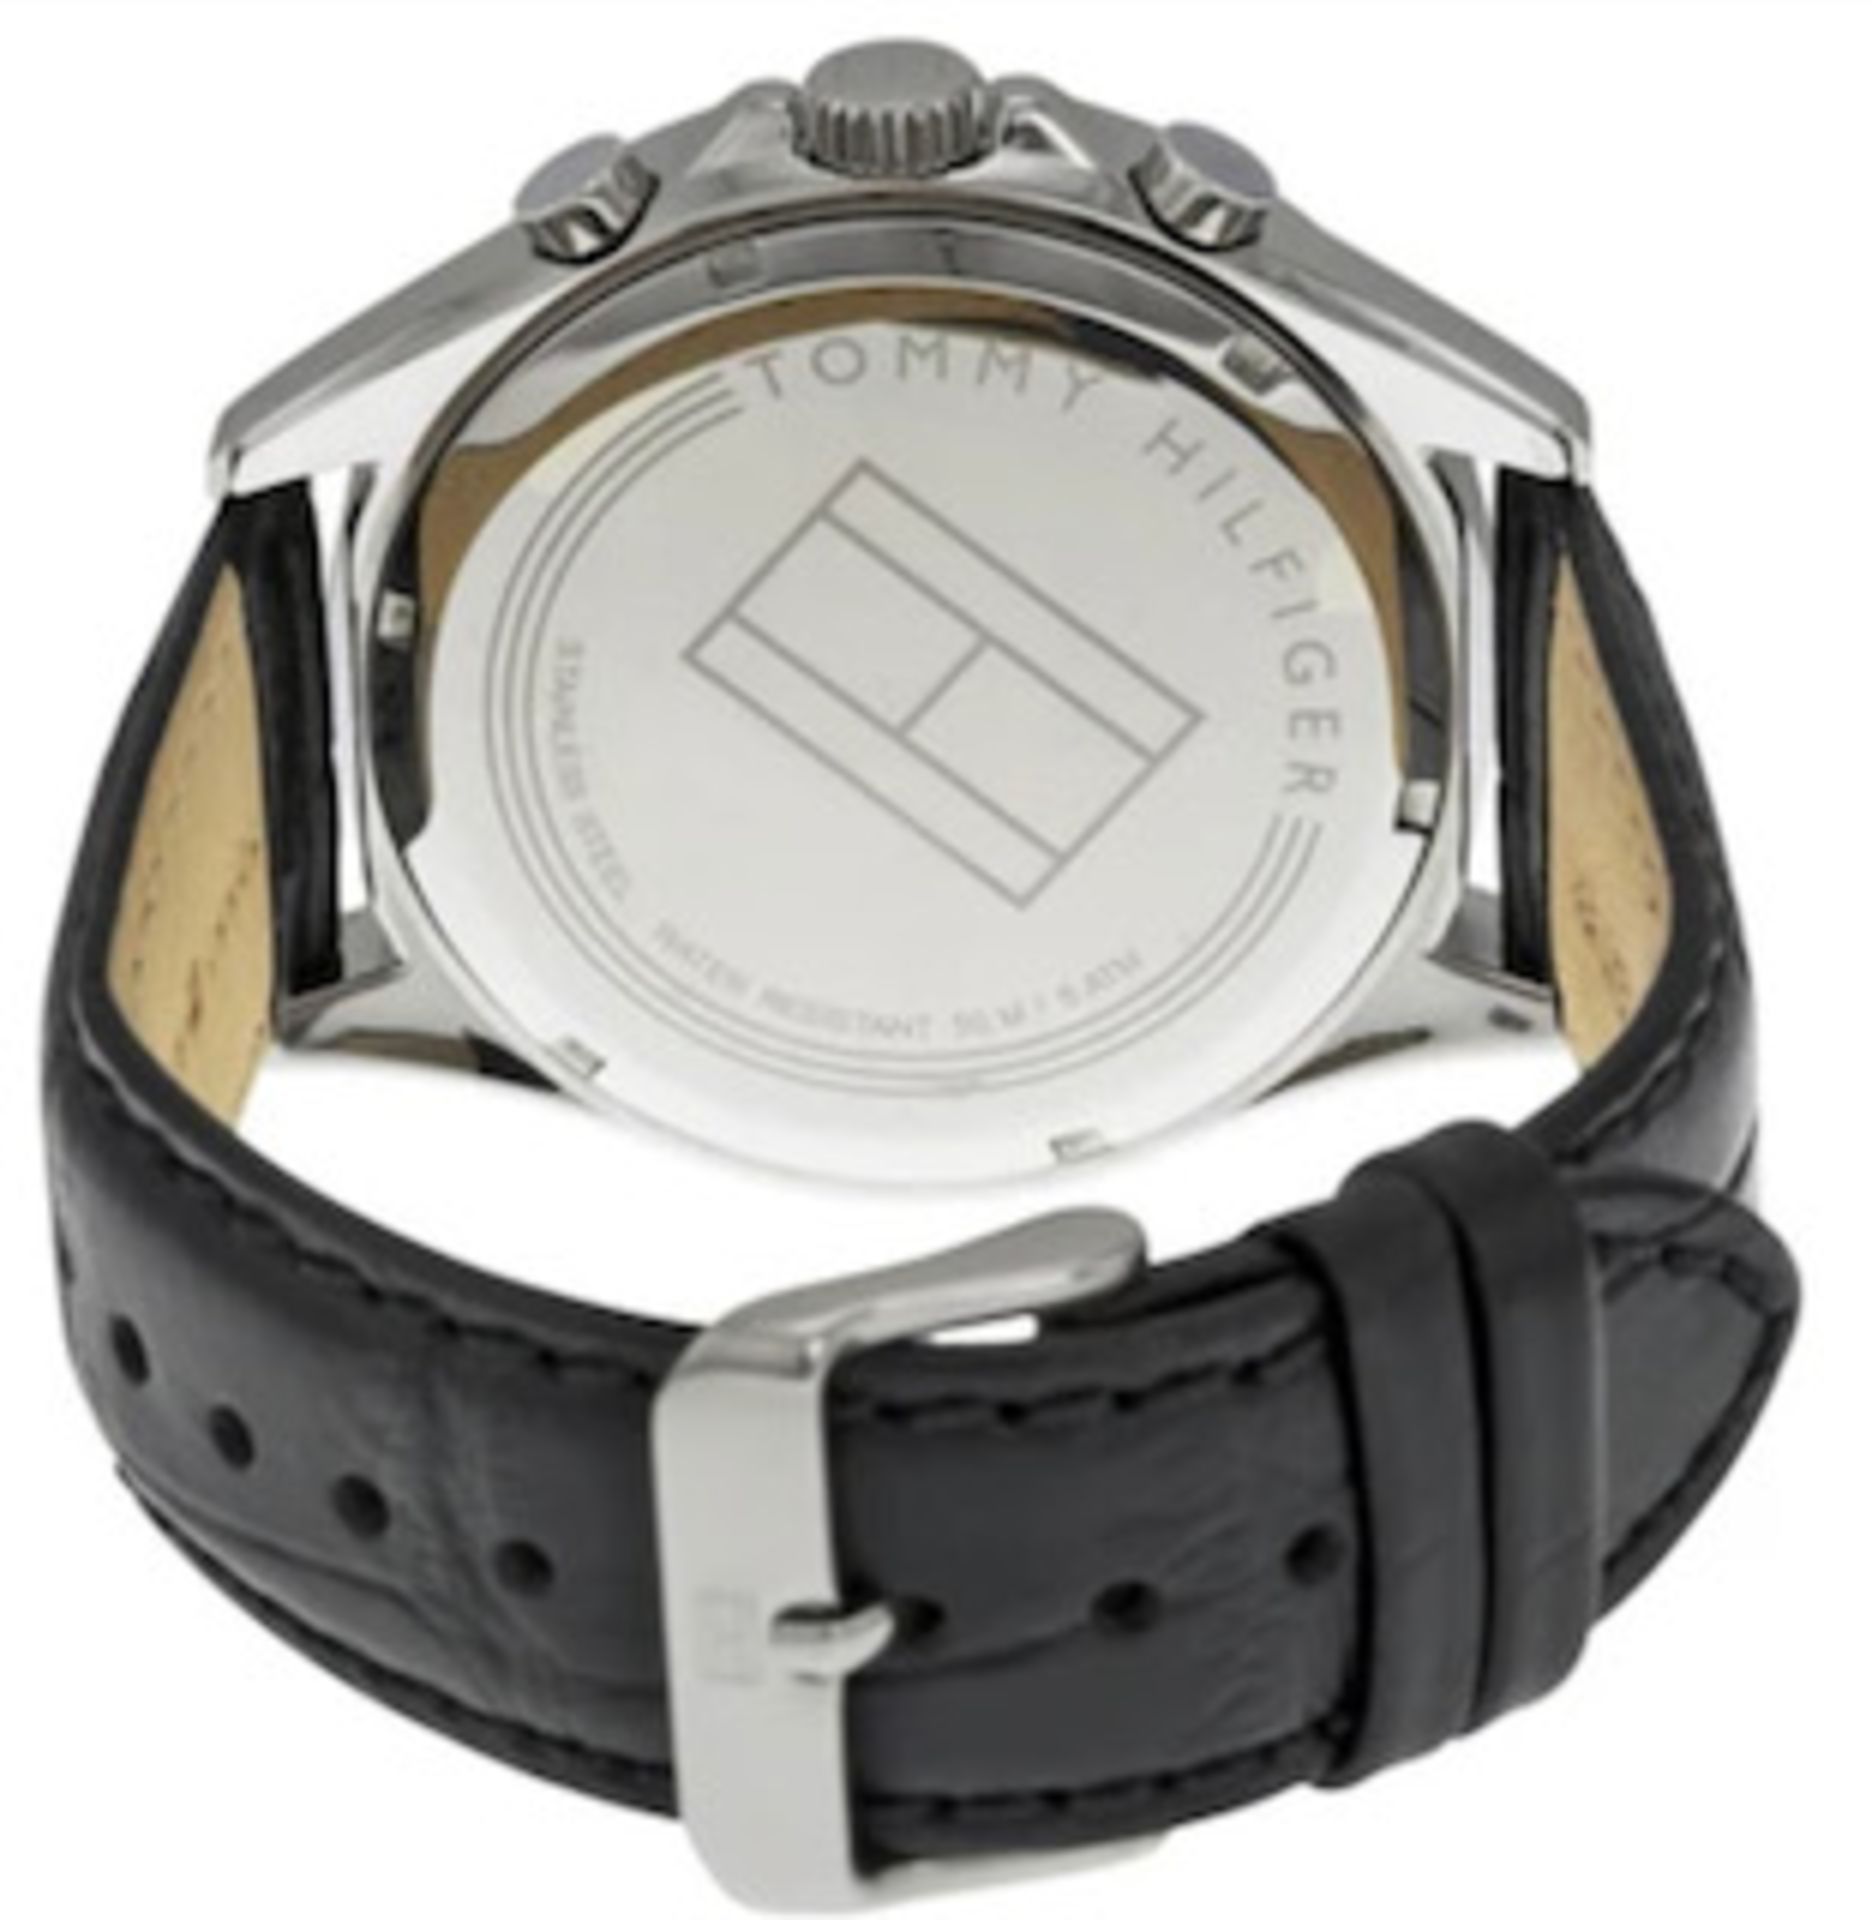 Tommy Hilfiger 1791117 Men's Black Dial Black Leather Watch - Image 3 of 8